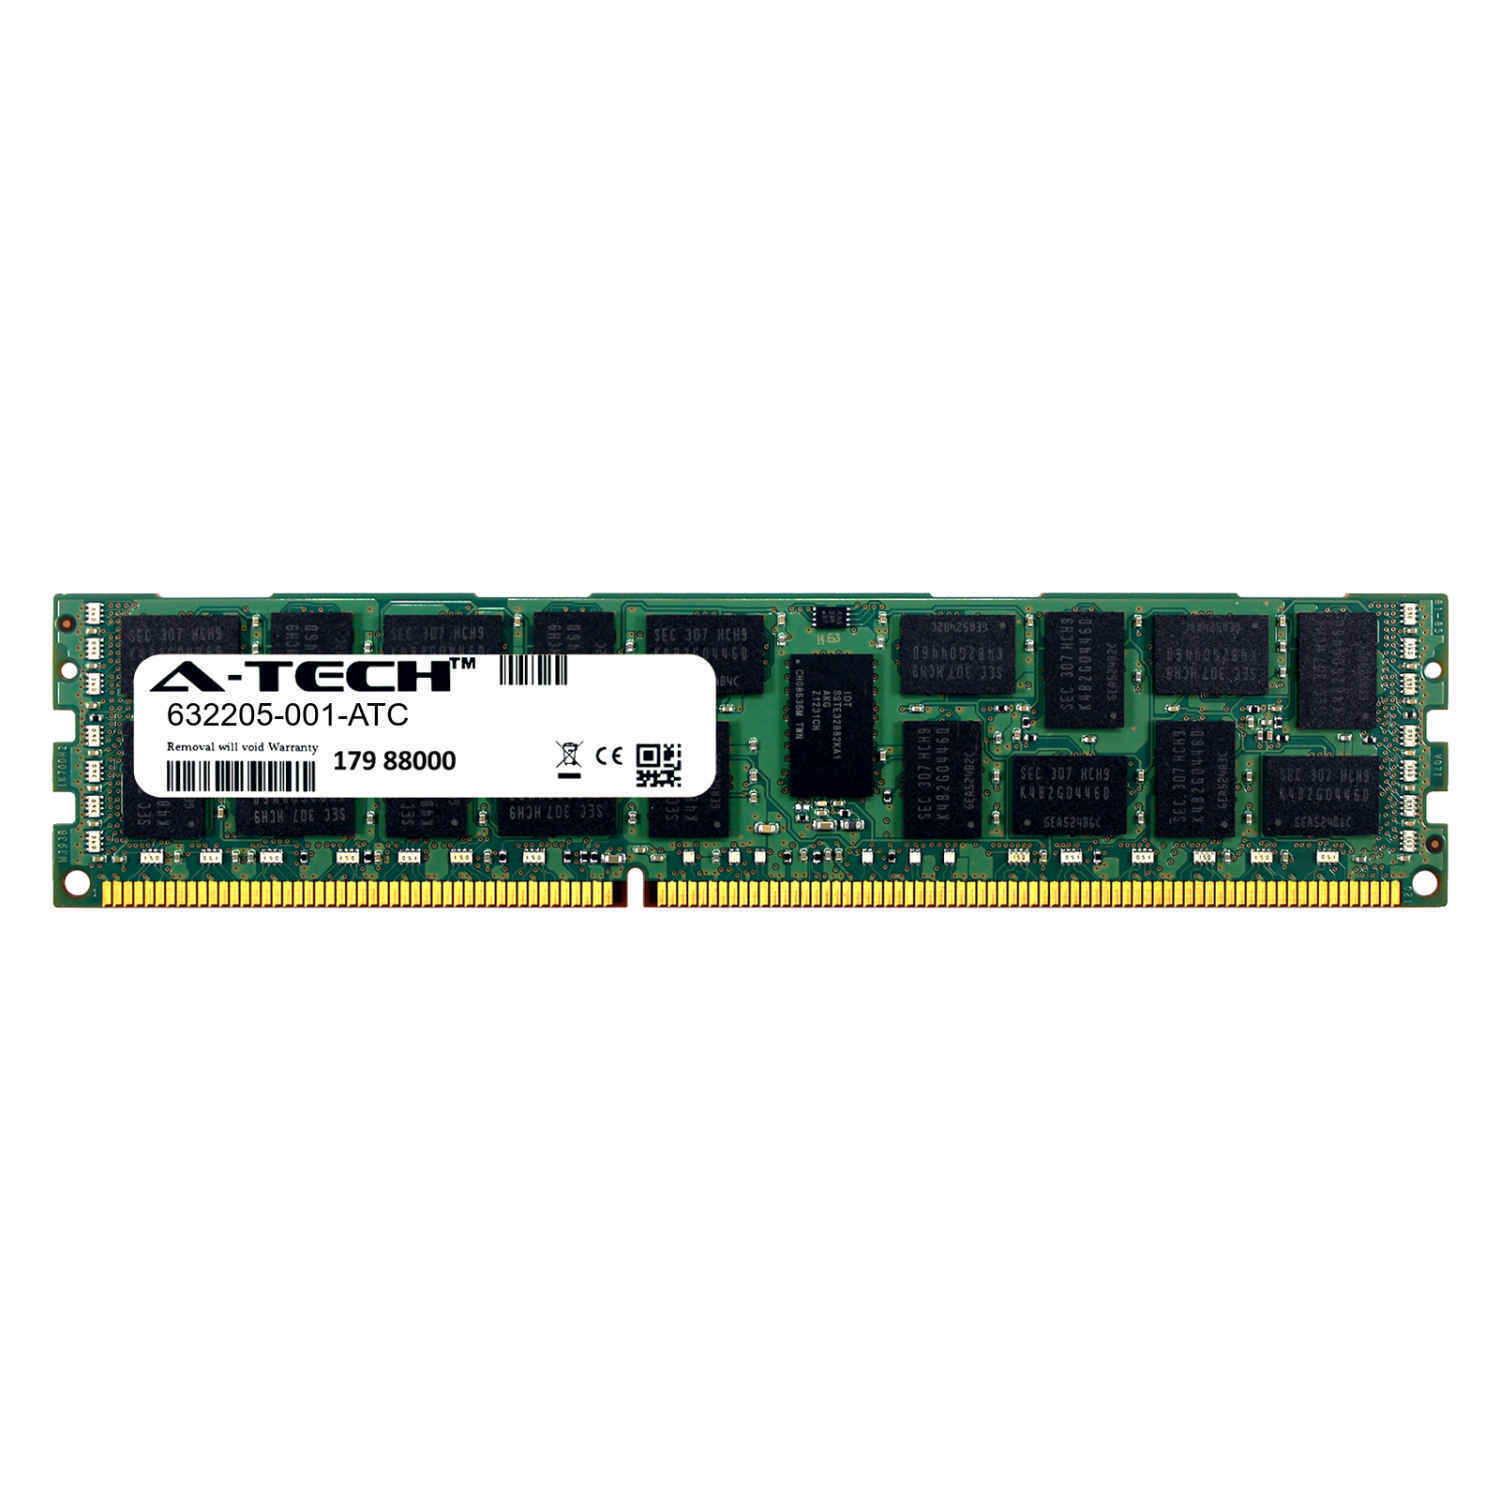 32GB DDR3 PC3-8500R 1066MHz RDIMM (HP 632205-001 Equivalent) Server Memory RAM